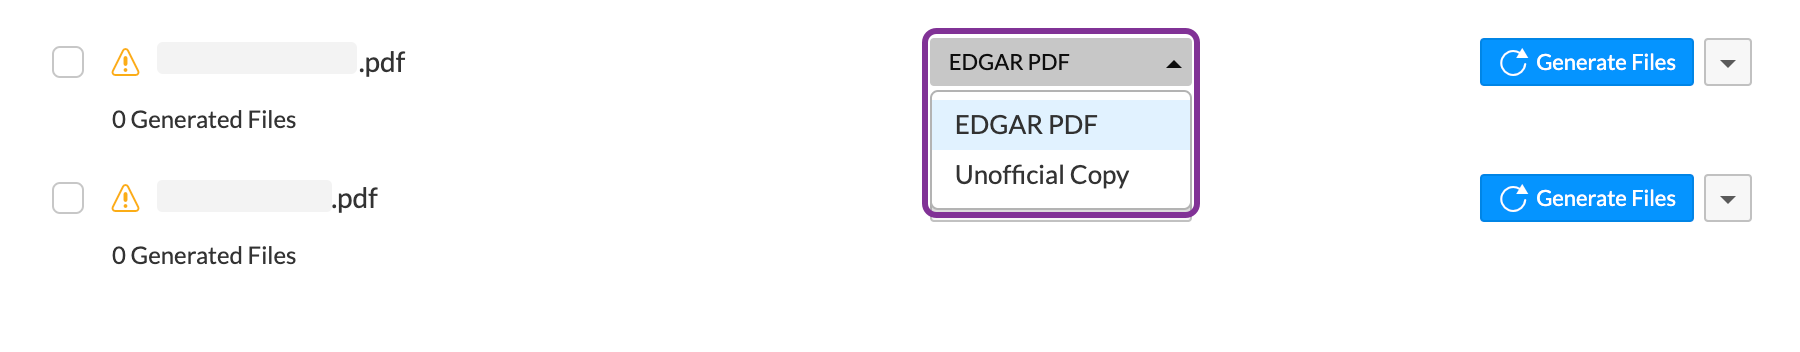 EDGAR PDFを選択する